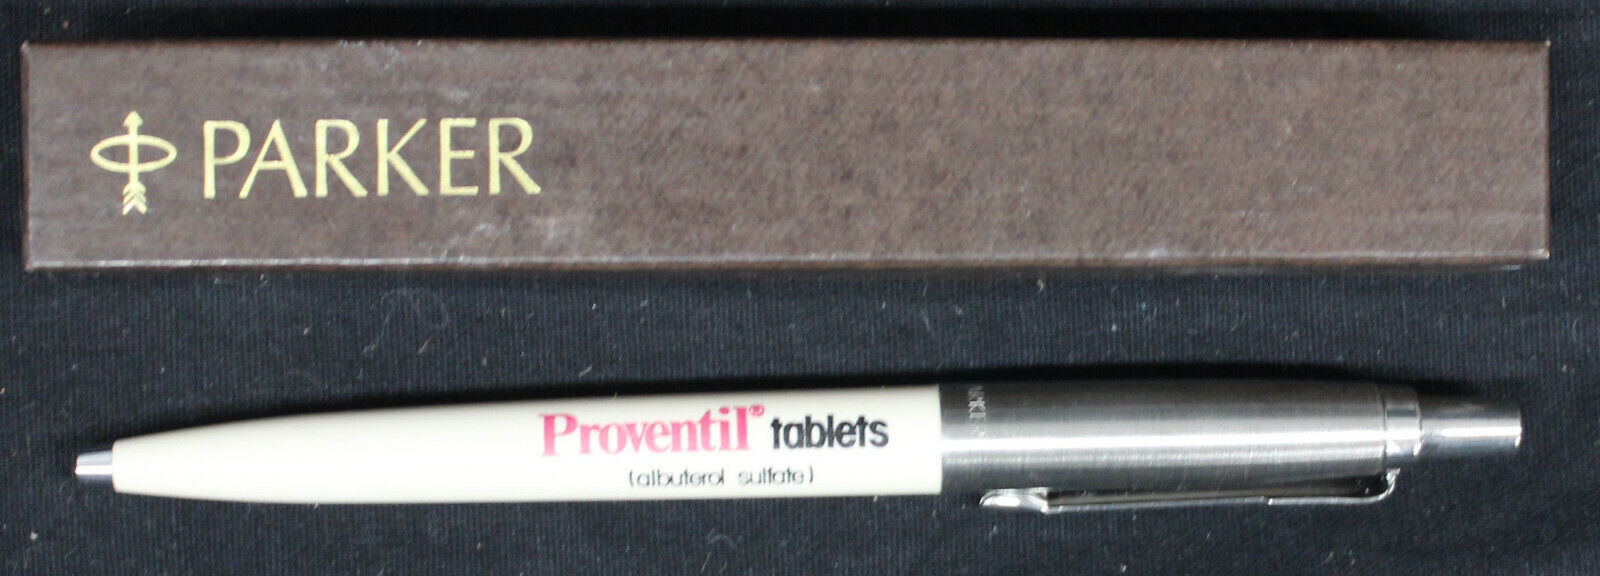 Original Vintage Parker Proventil Tablets Advertising Ballpoint Pen w/Box